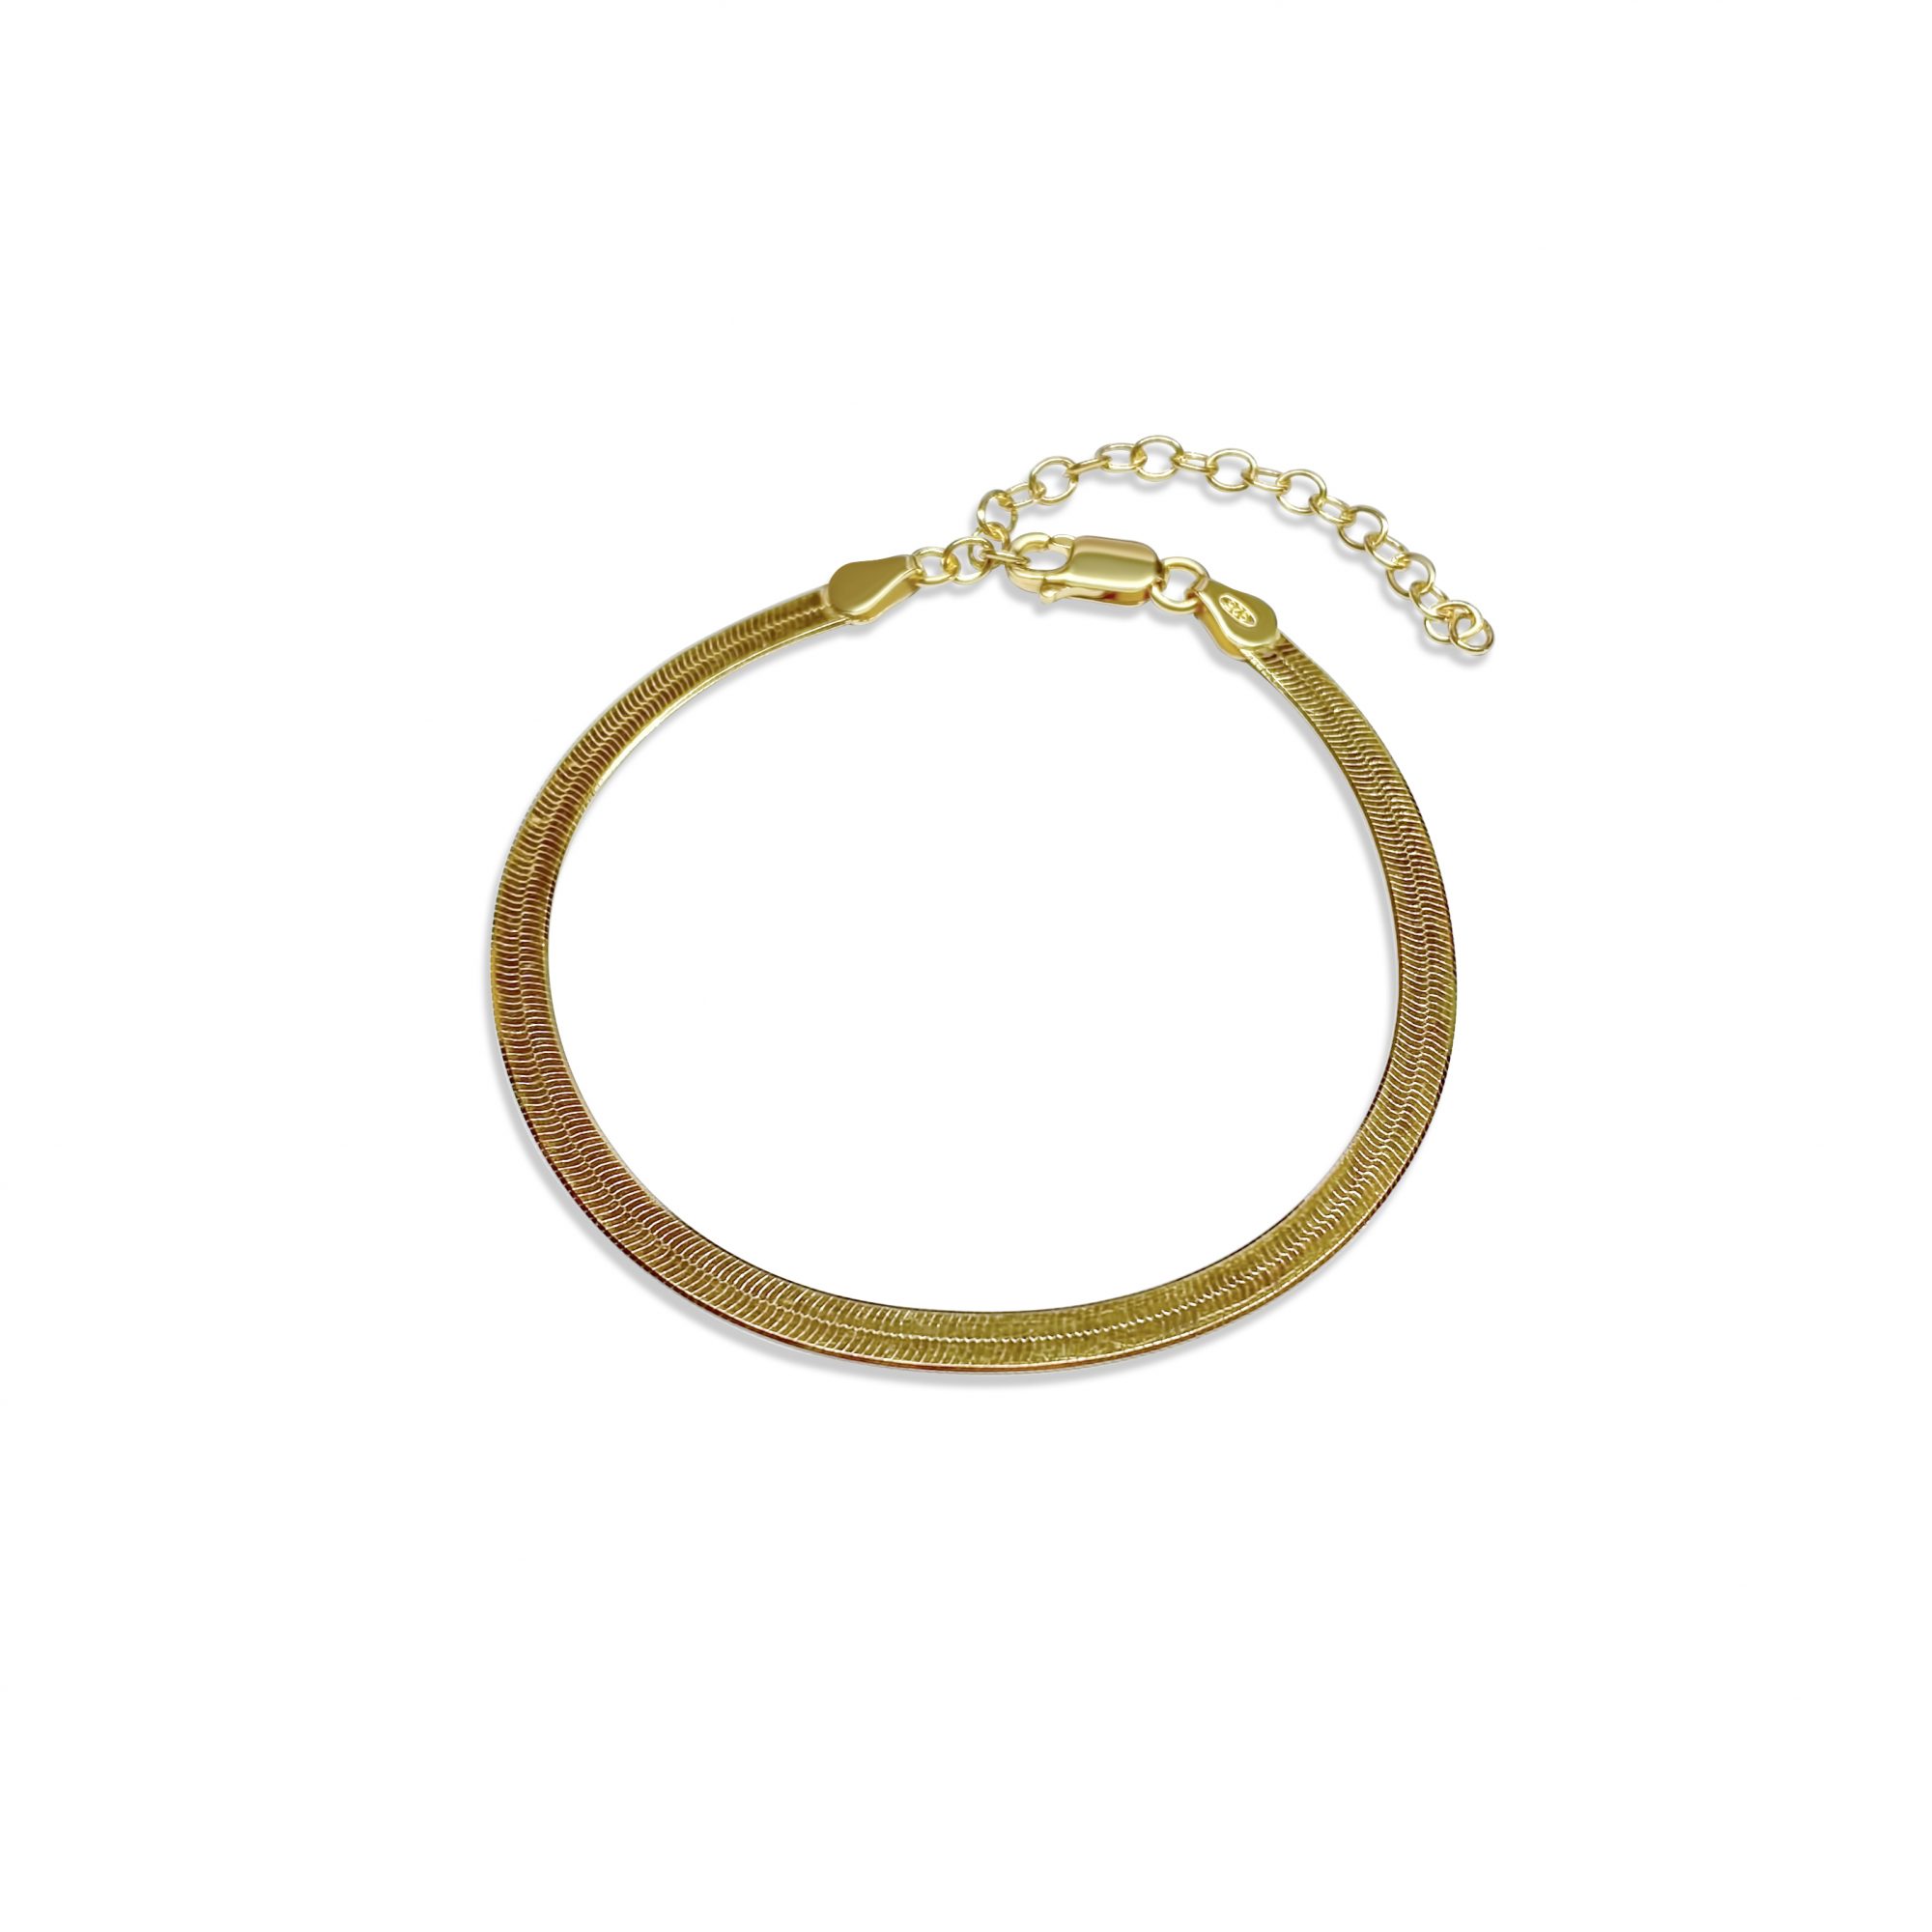 Gold plated snake bracelet